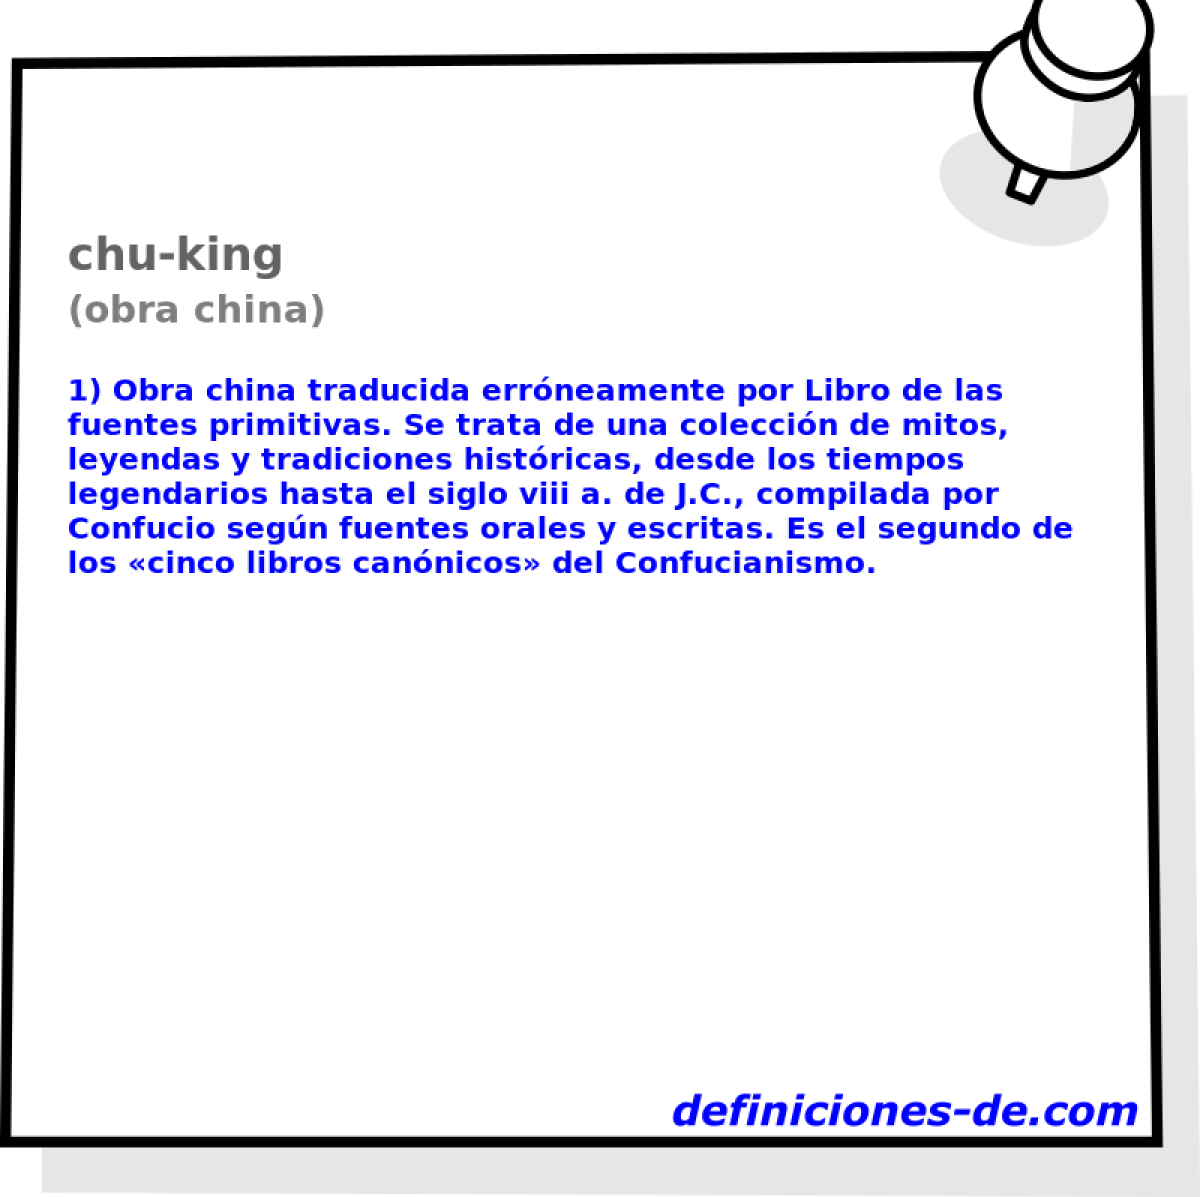 chu-king (obra china)